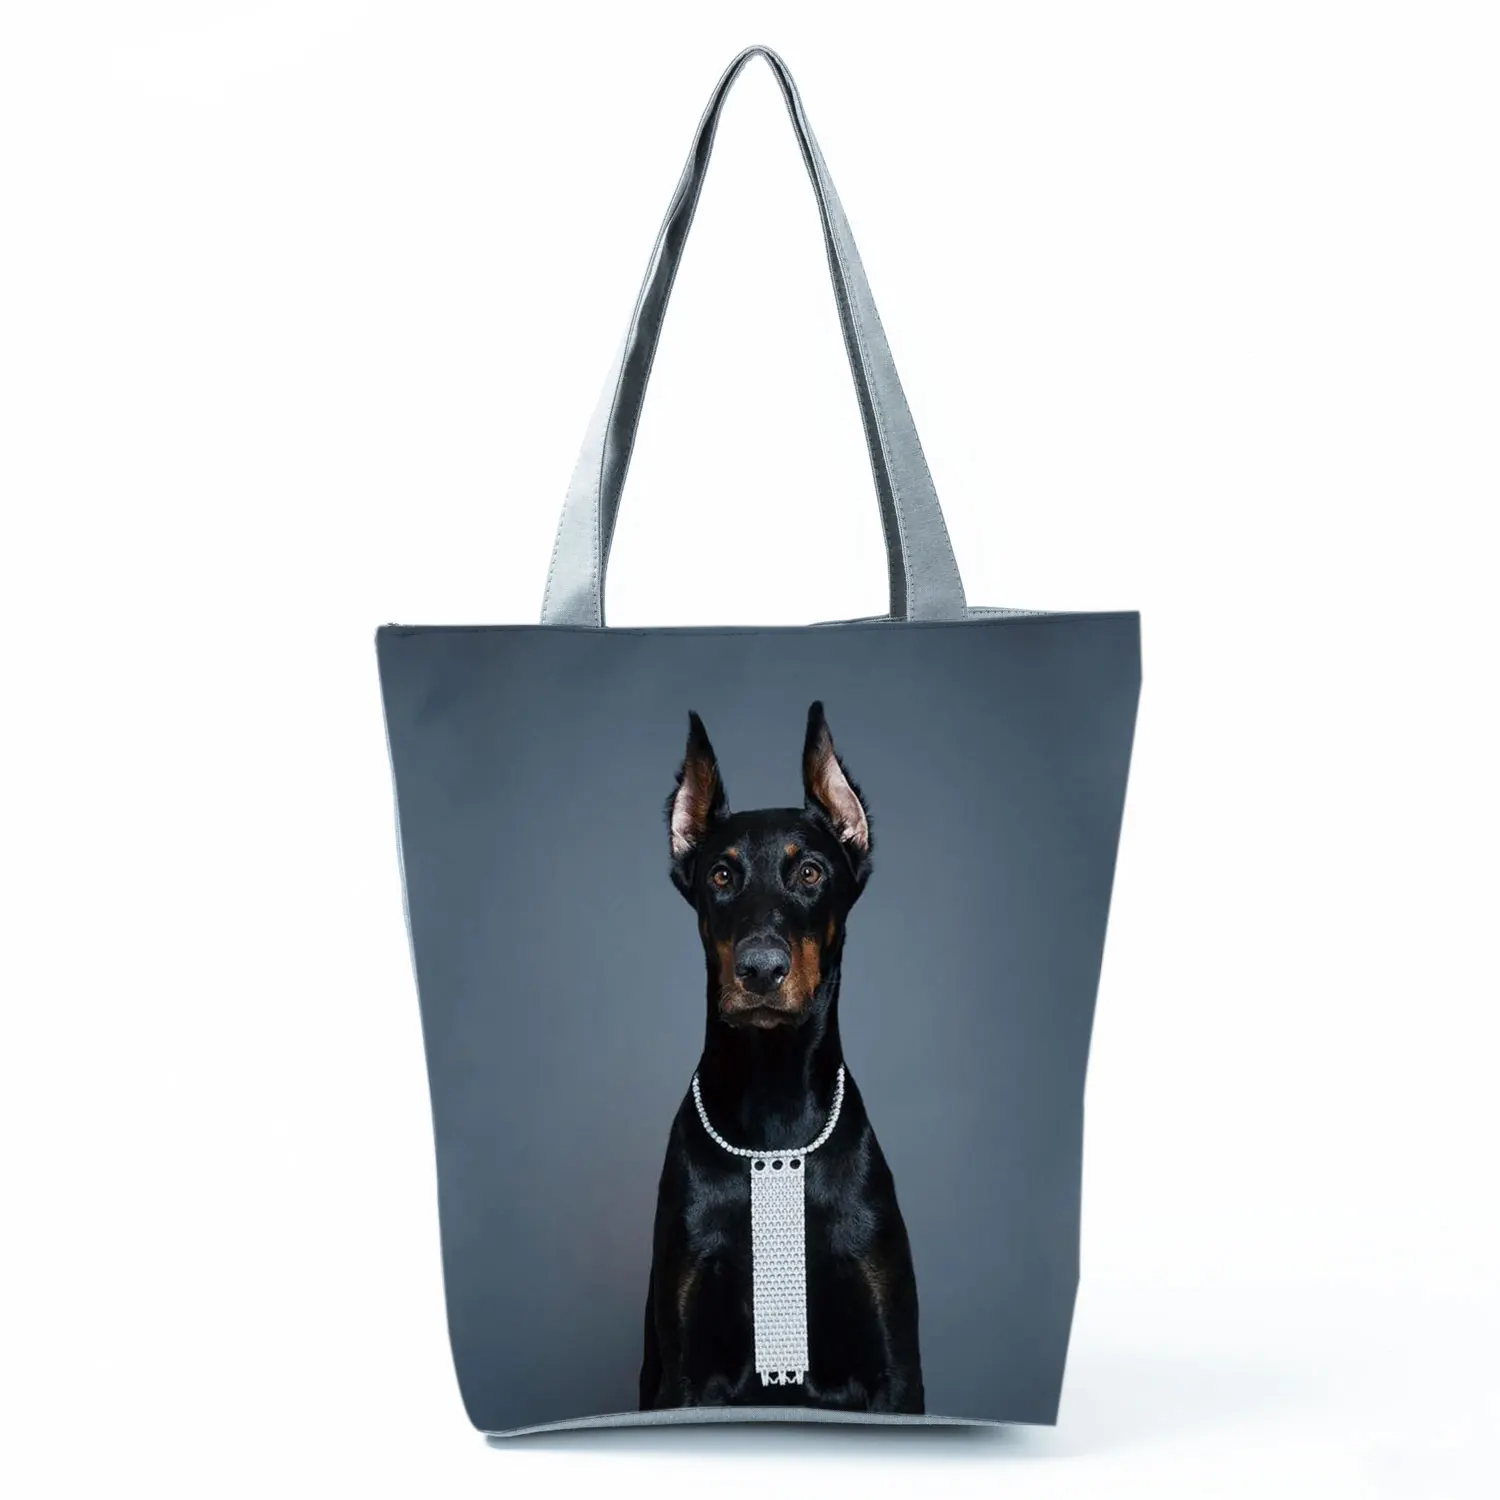 Dog Printed Women Handbags Animal Fashion Tote Shoulder Bags Large Capacity Shopping Bag Female Custom Pattern Travel Beach Bag keychain wallet Totes